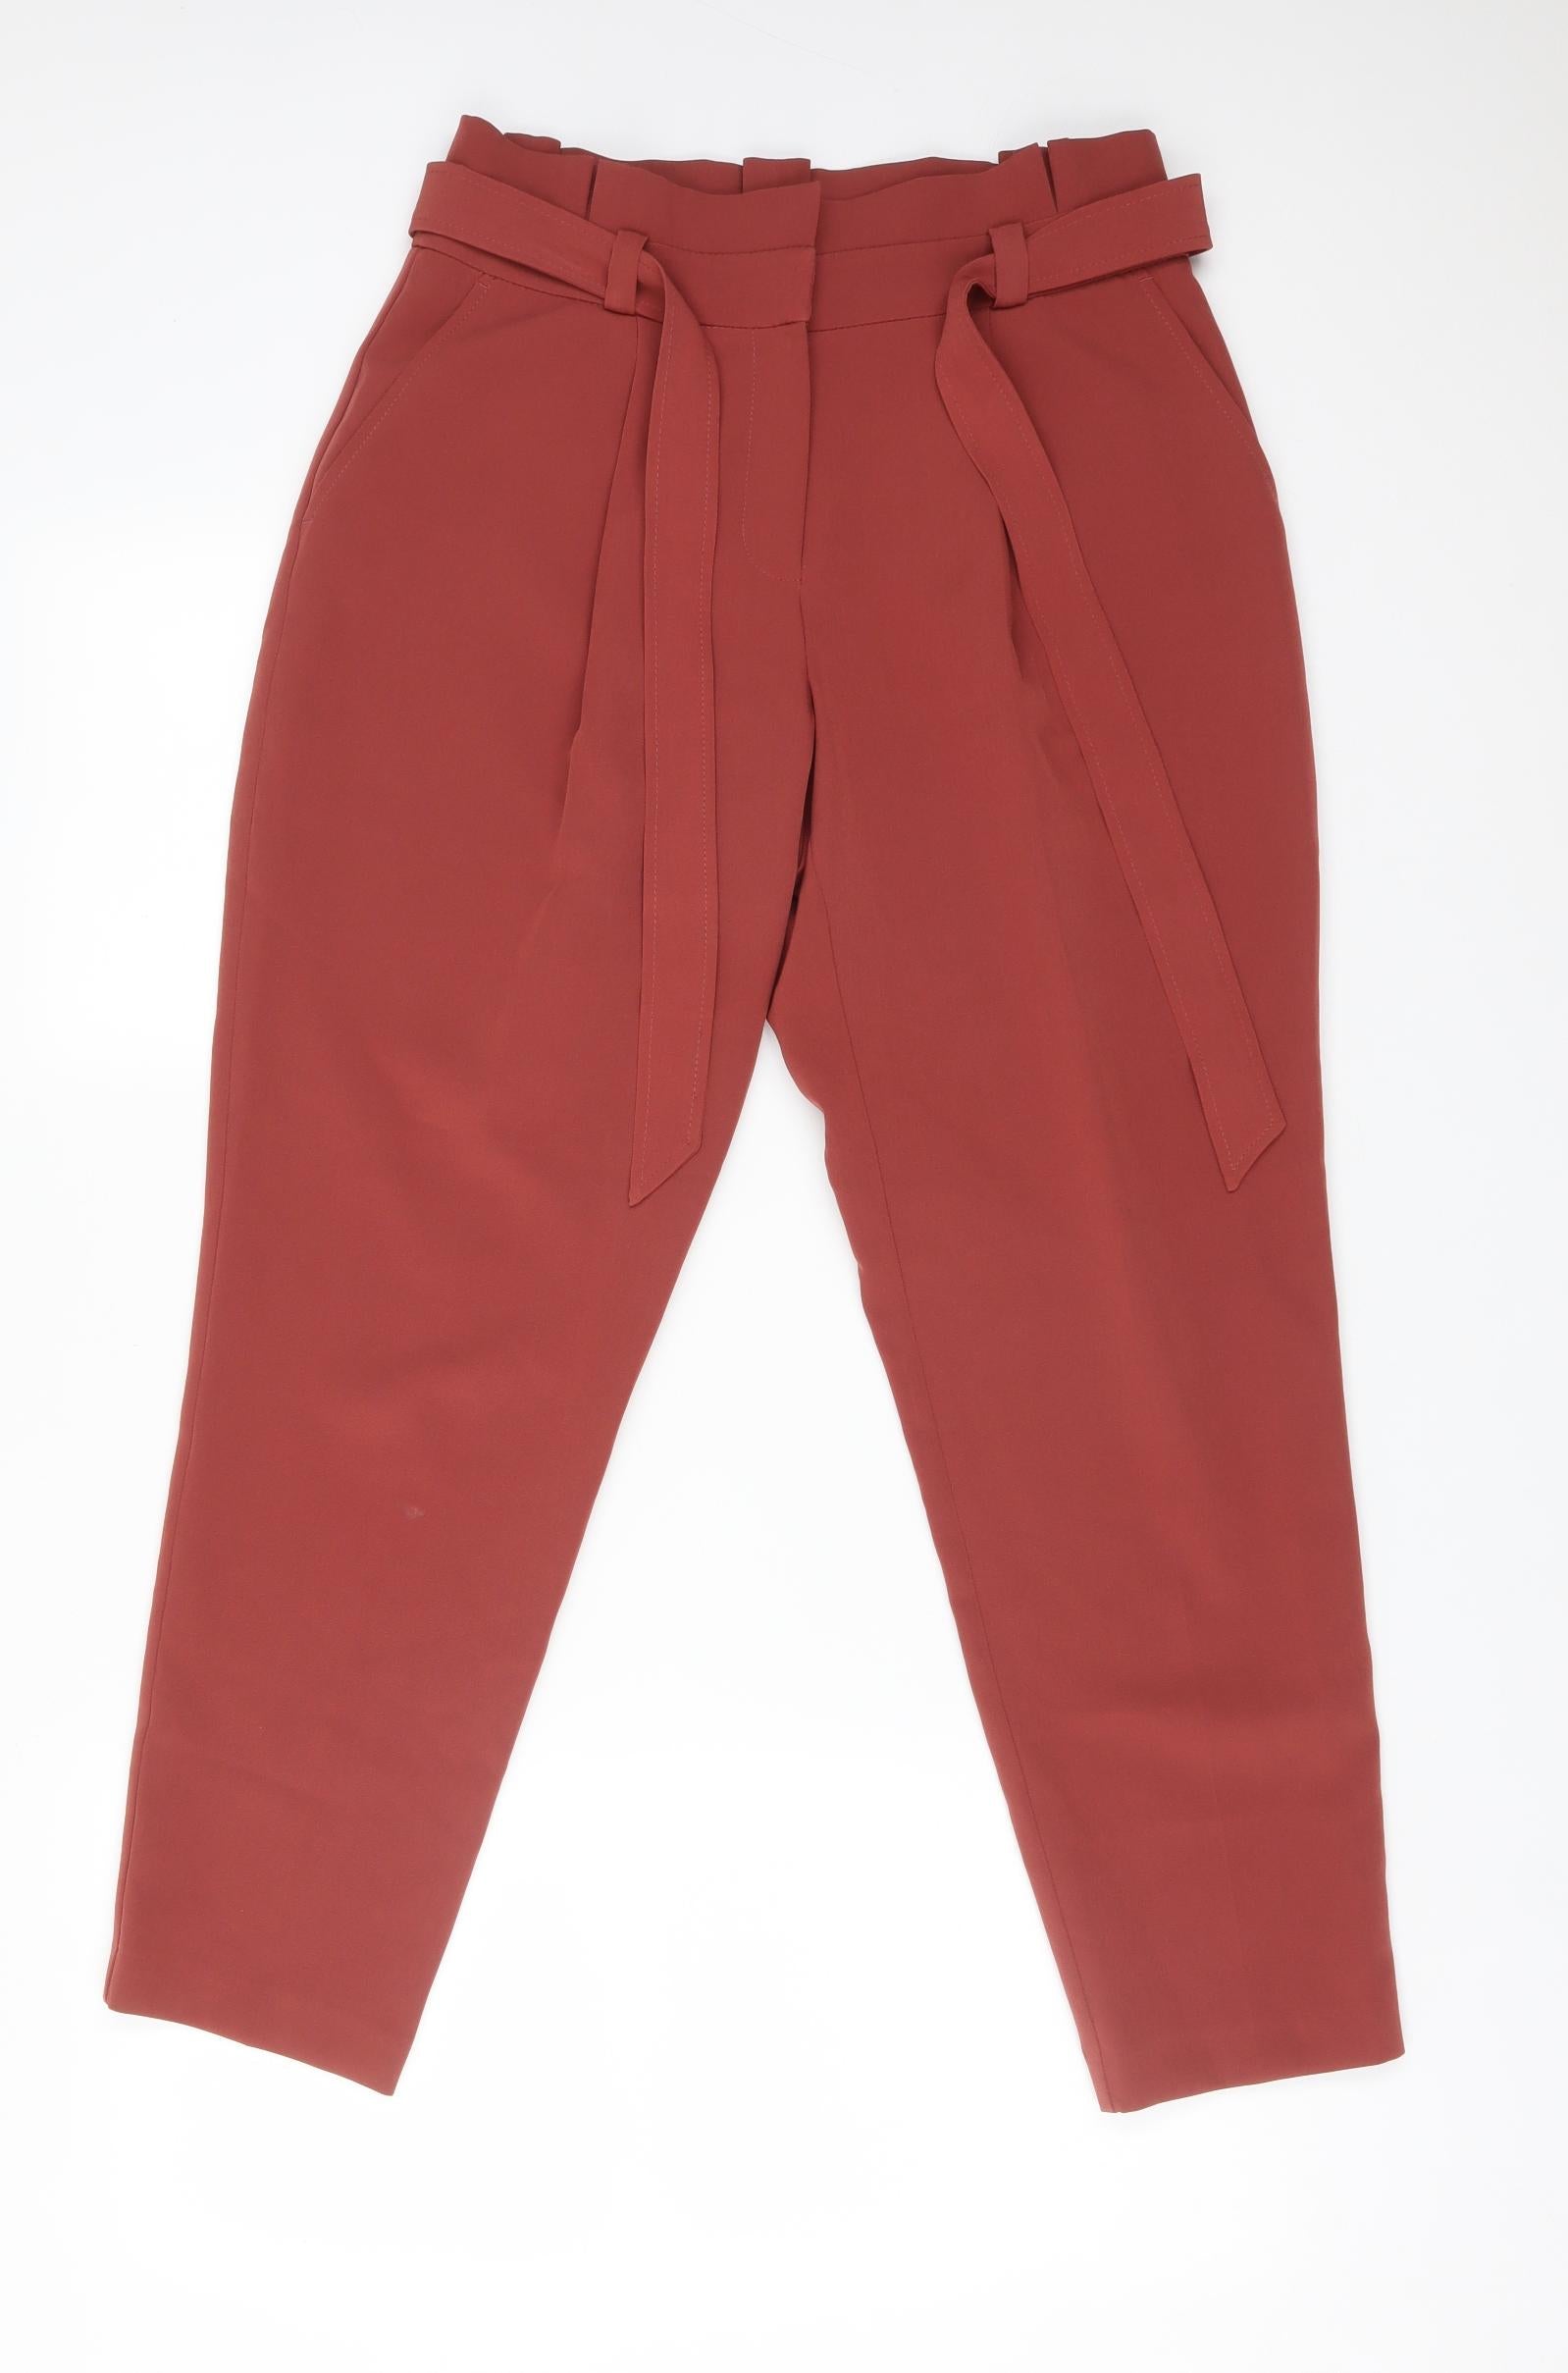 New Look Womens Sz 22 Miller Tie Waist Trousers Pants Mid Green BNTW Work  Casual  eBay